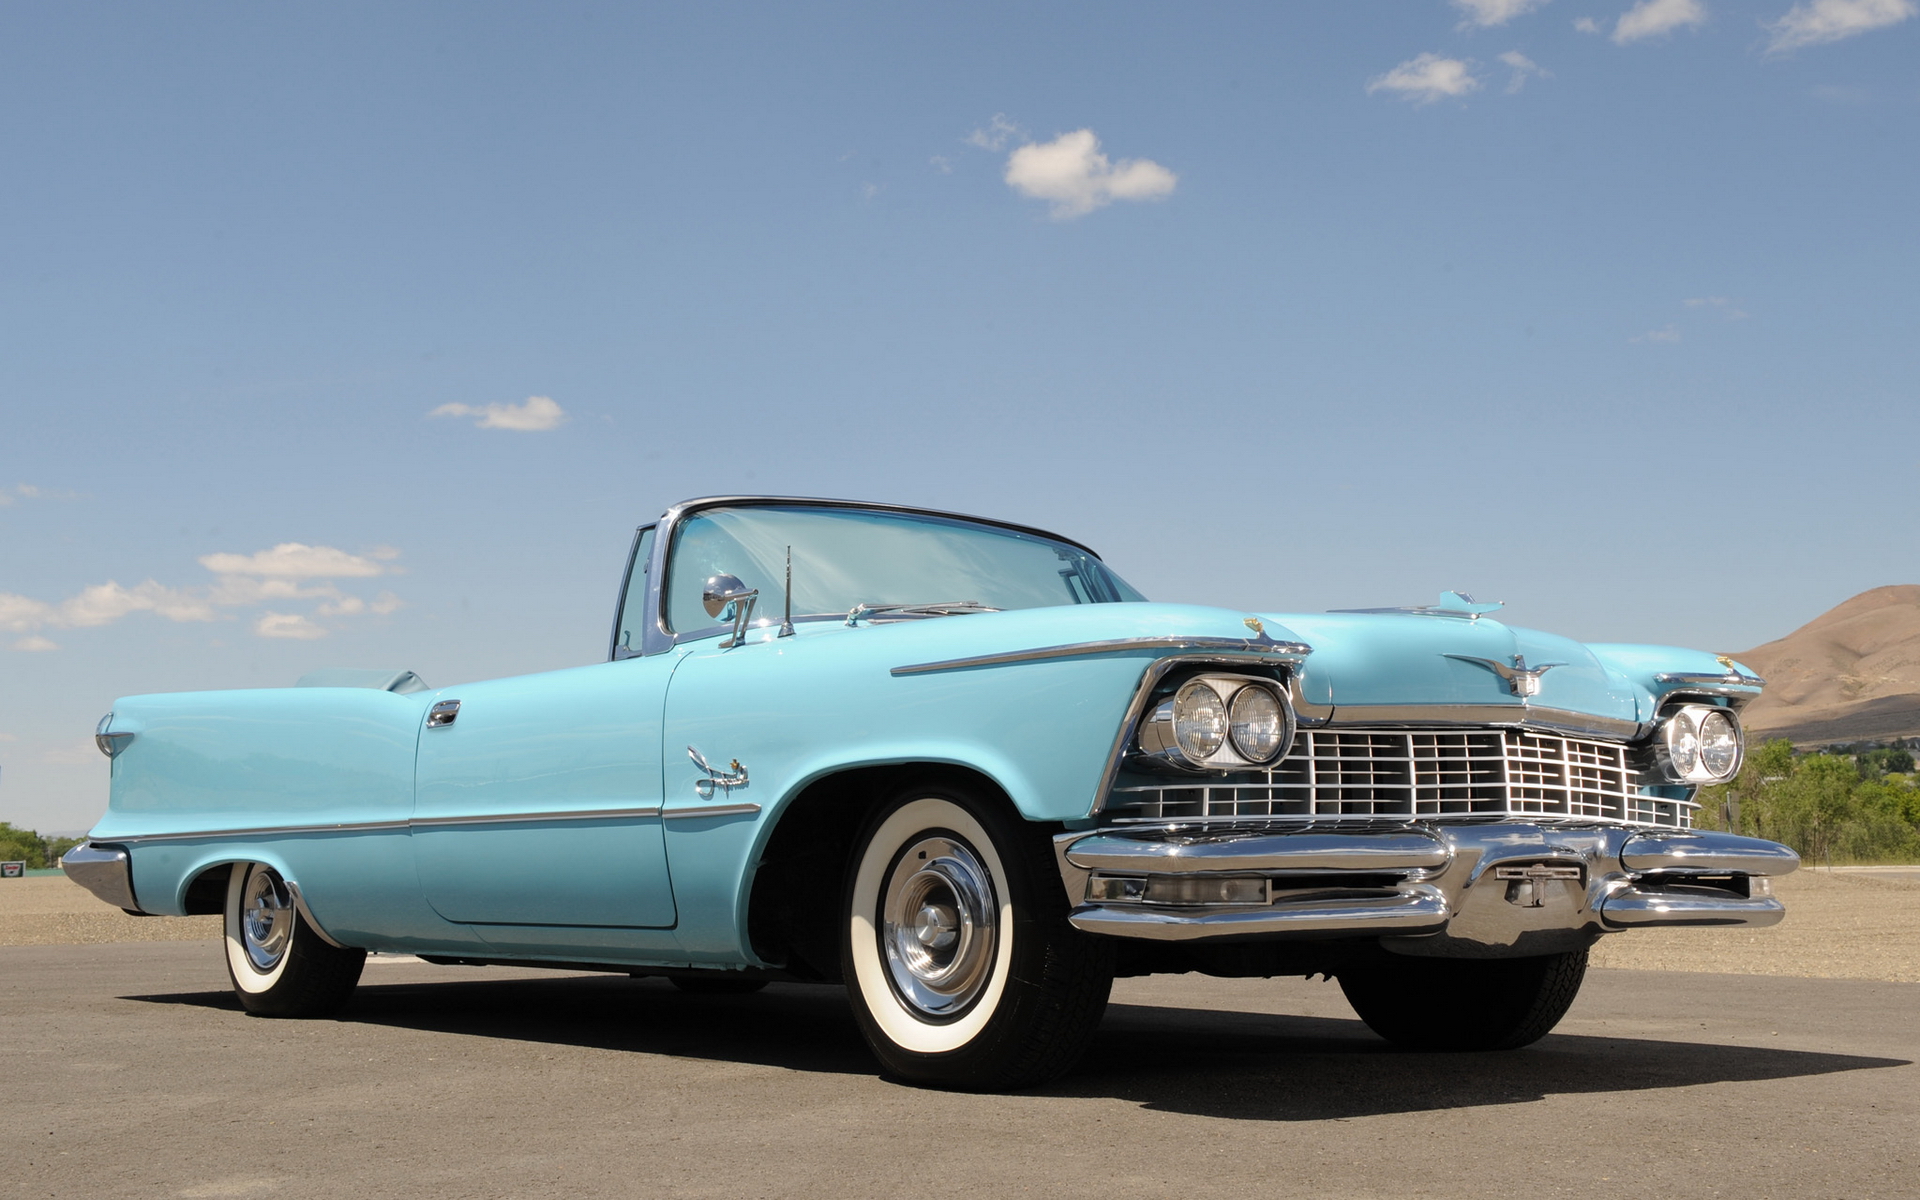 Скачати мобільні шпалери 1957 Chrysler Imperial, Крайслер, Транспортні Засоби безкоштовно.